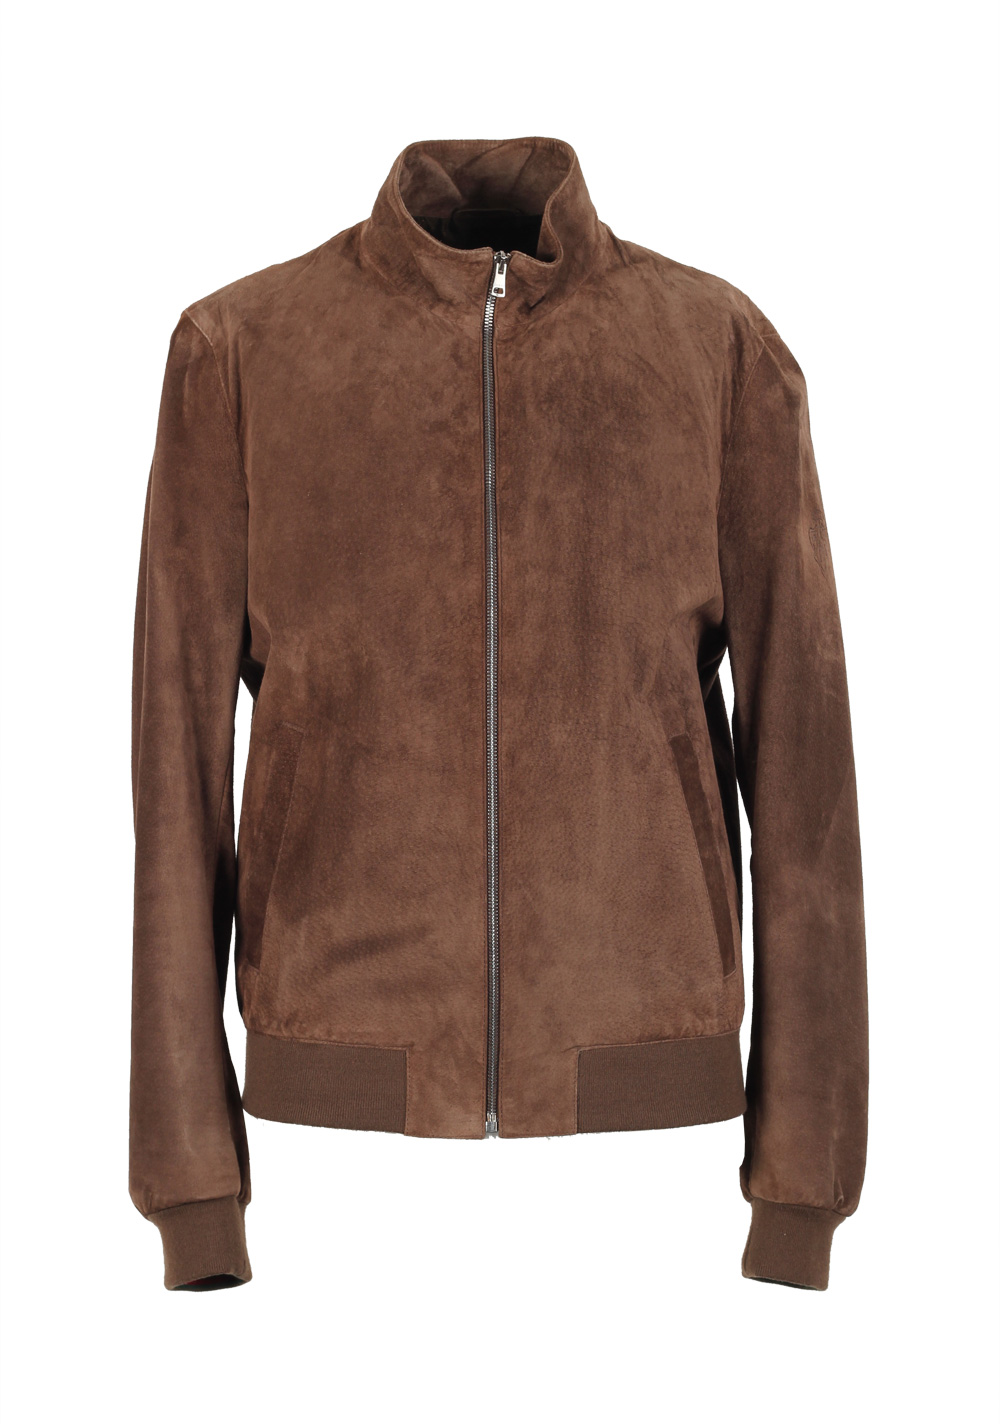 Gucci Brown Leather Bomber Jacket Coat Size 48 / 38R U.S. | Costume Limité